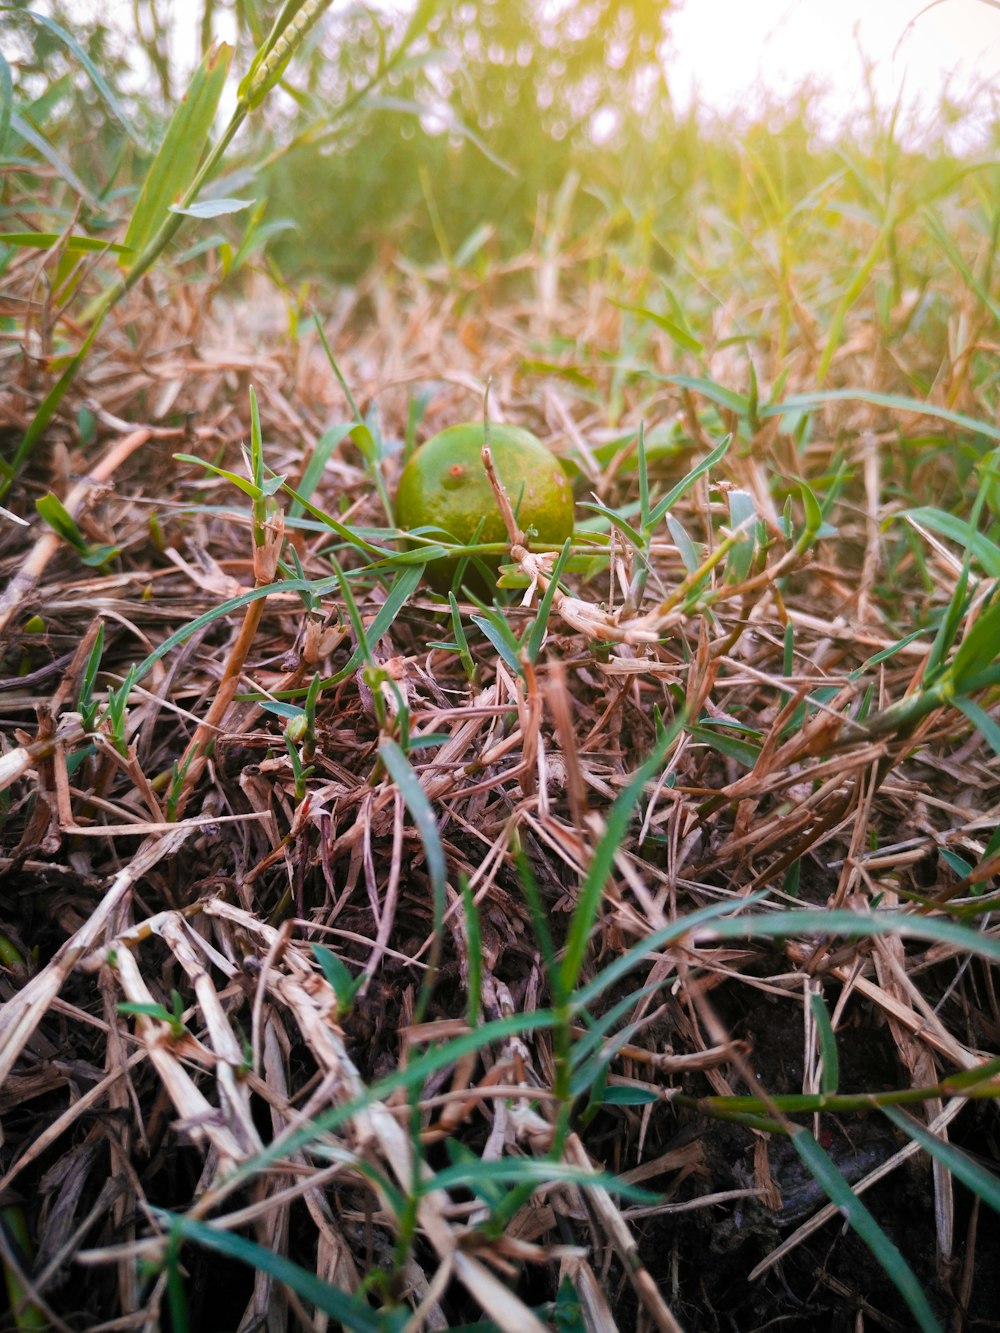 green round fruit on brown grass